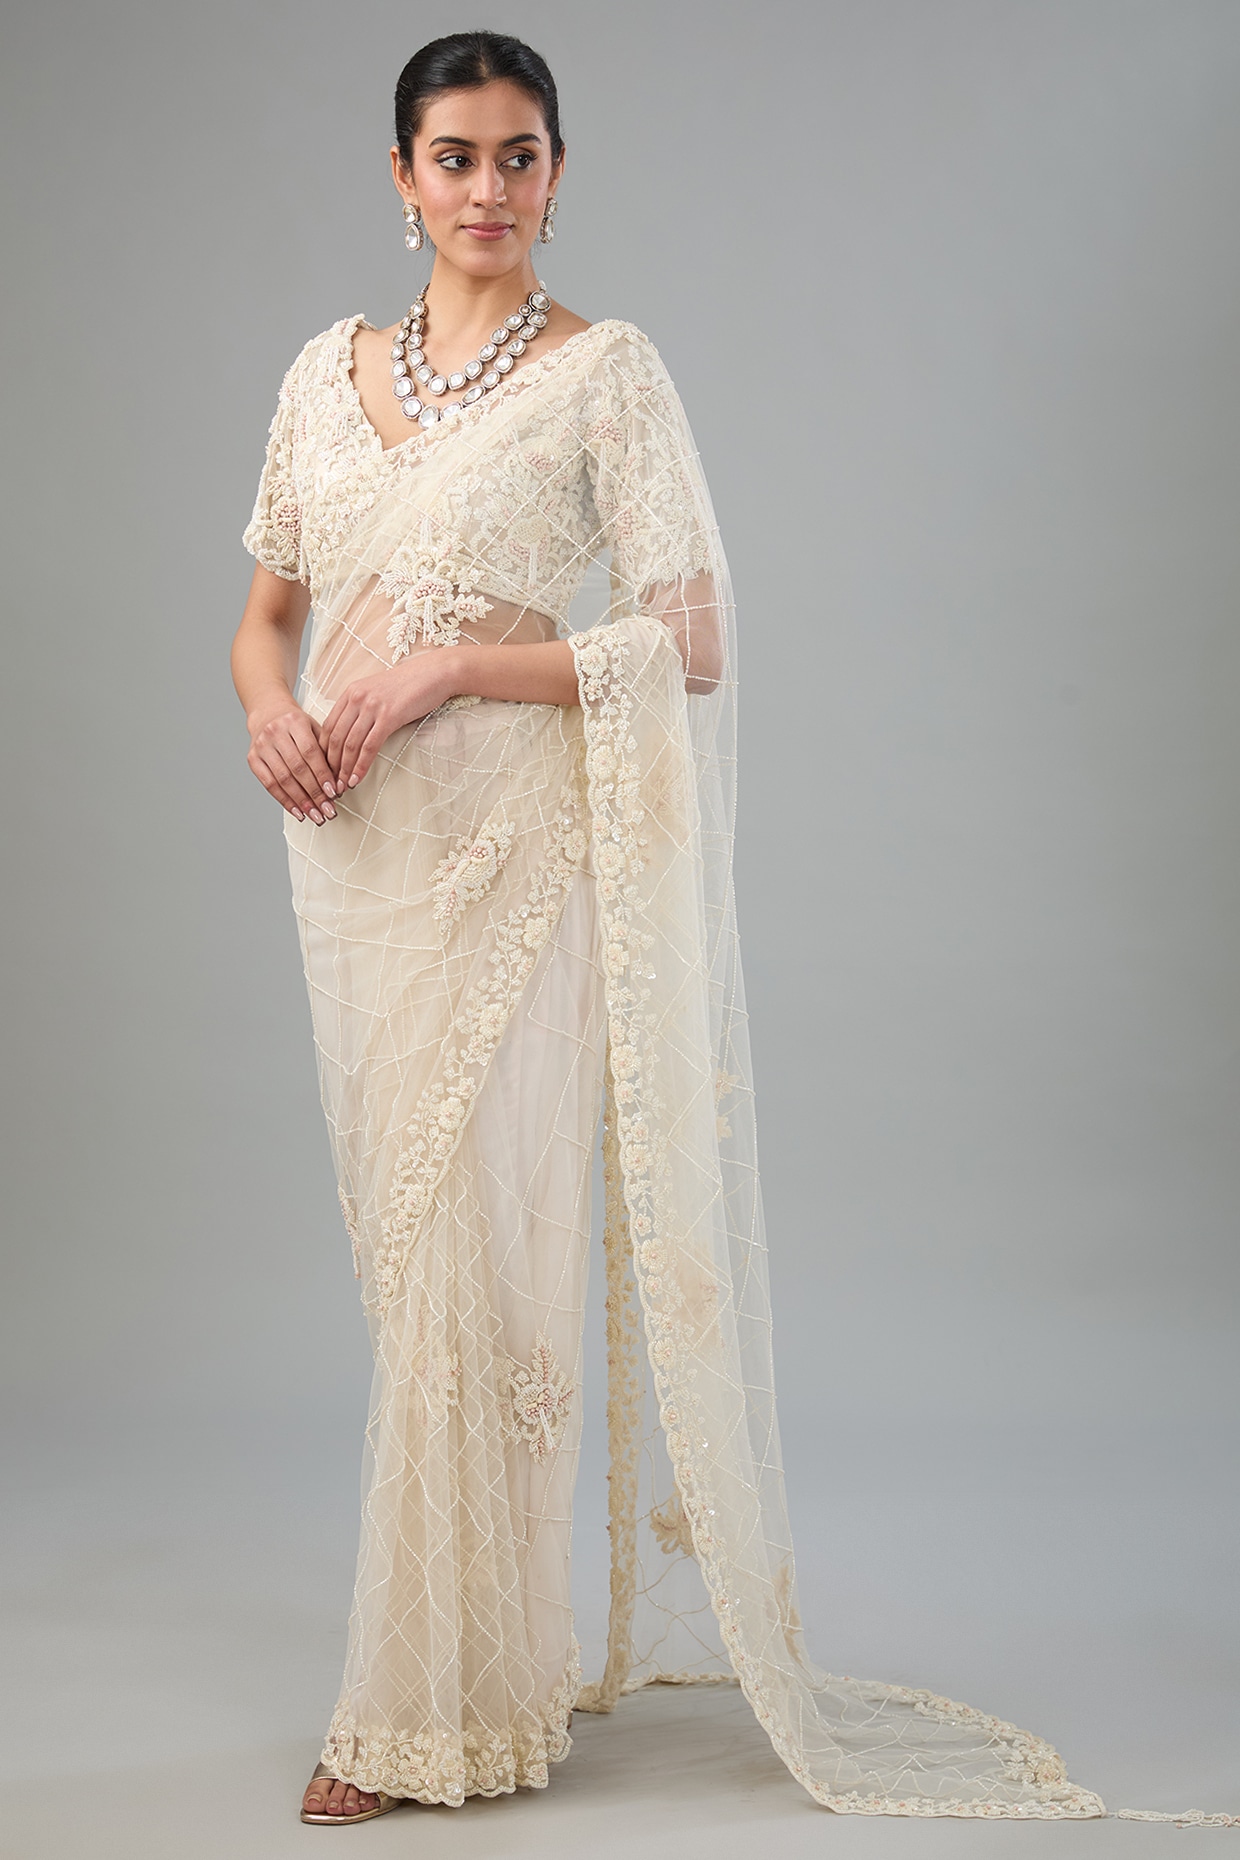 Anushka in Traditional Off White Saree - Saree Blouse Patterns